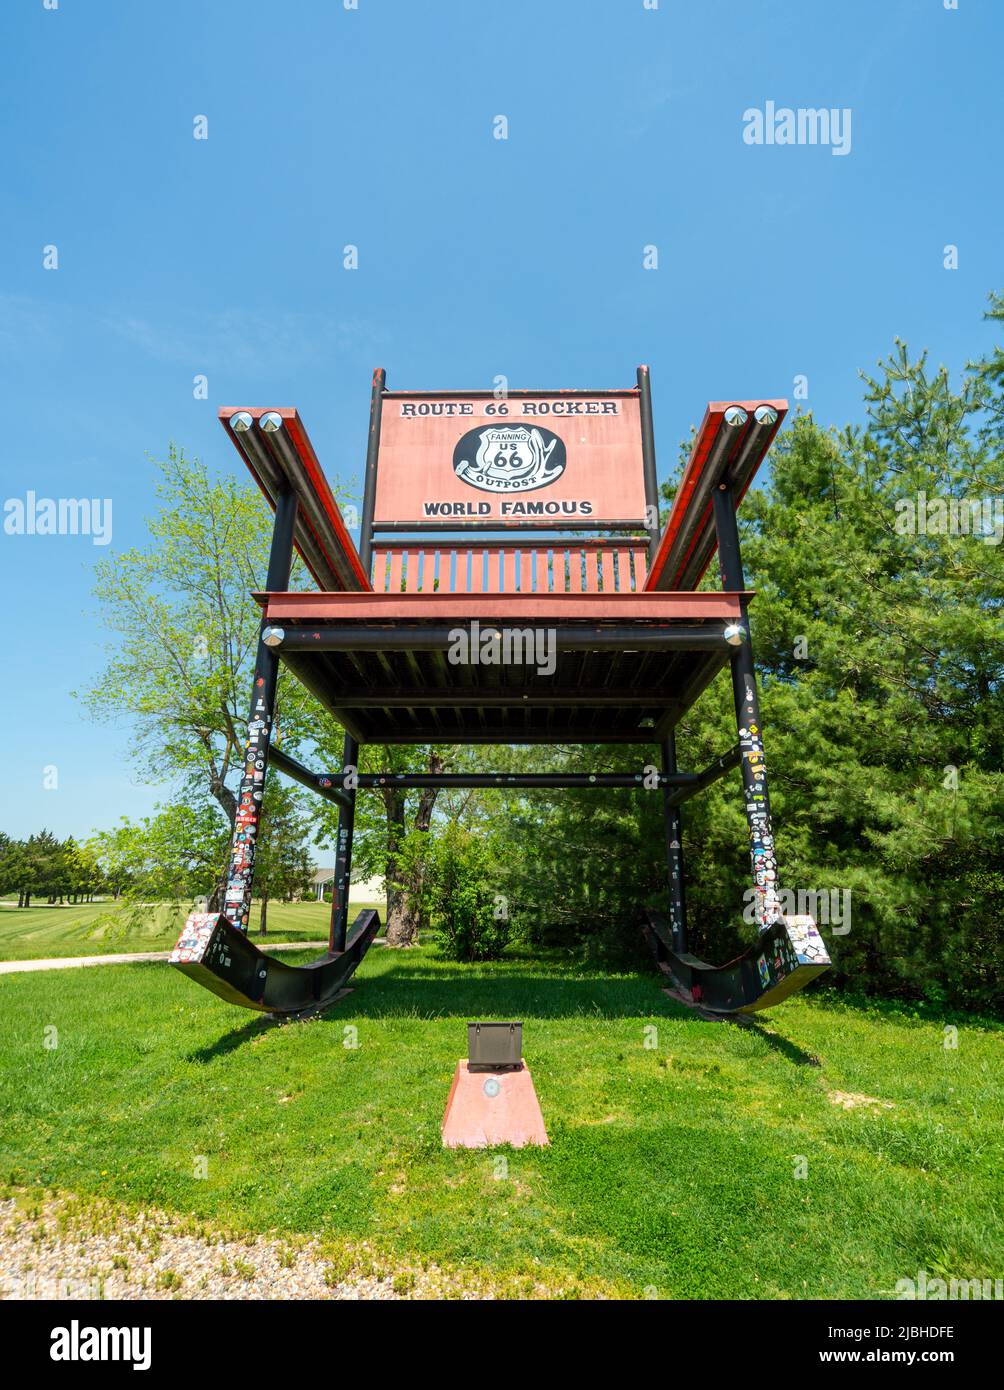 Weltberühmter Route 66 Rocker, Fanning Outpost, Fanning, Missouri MO, USA Stockfoto